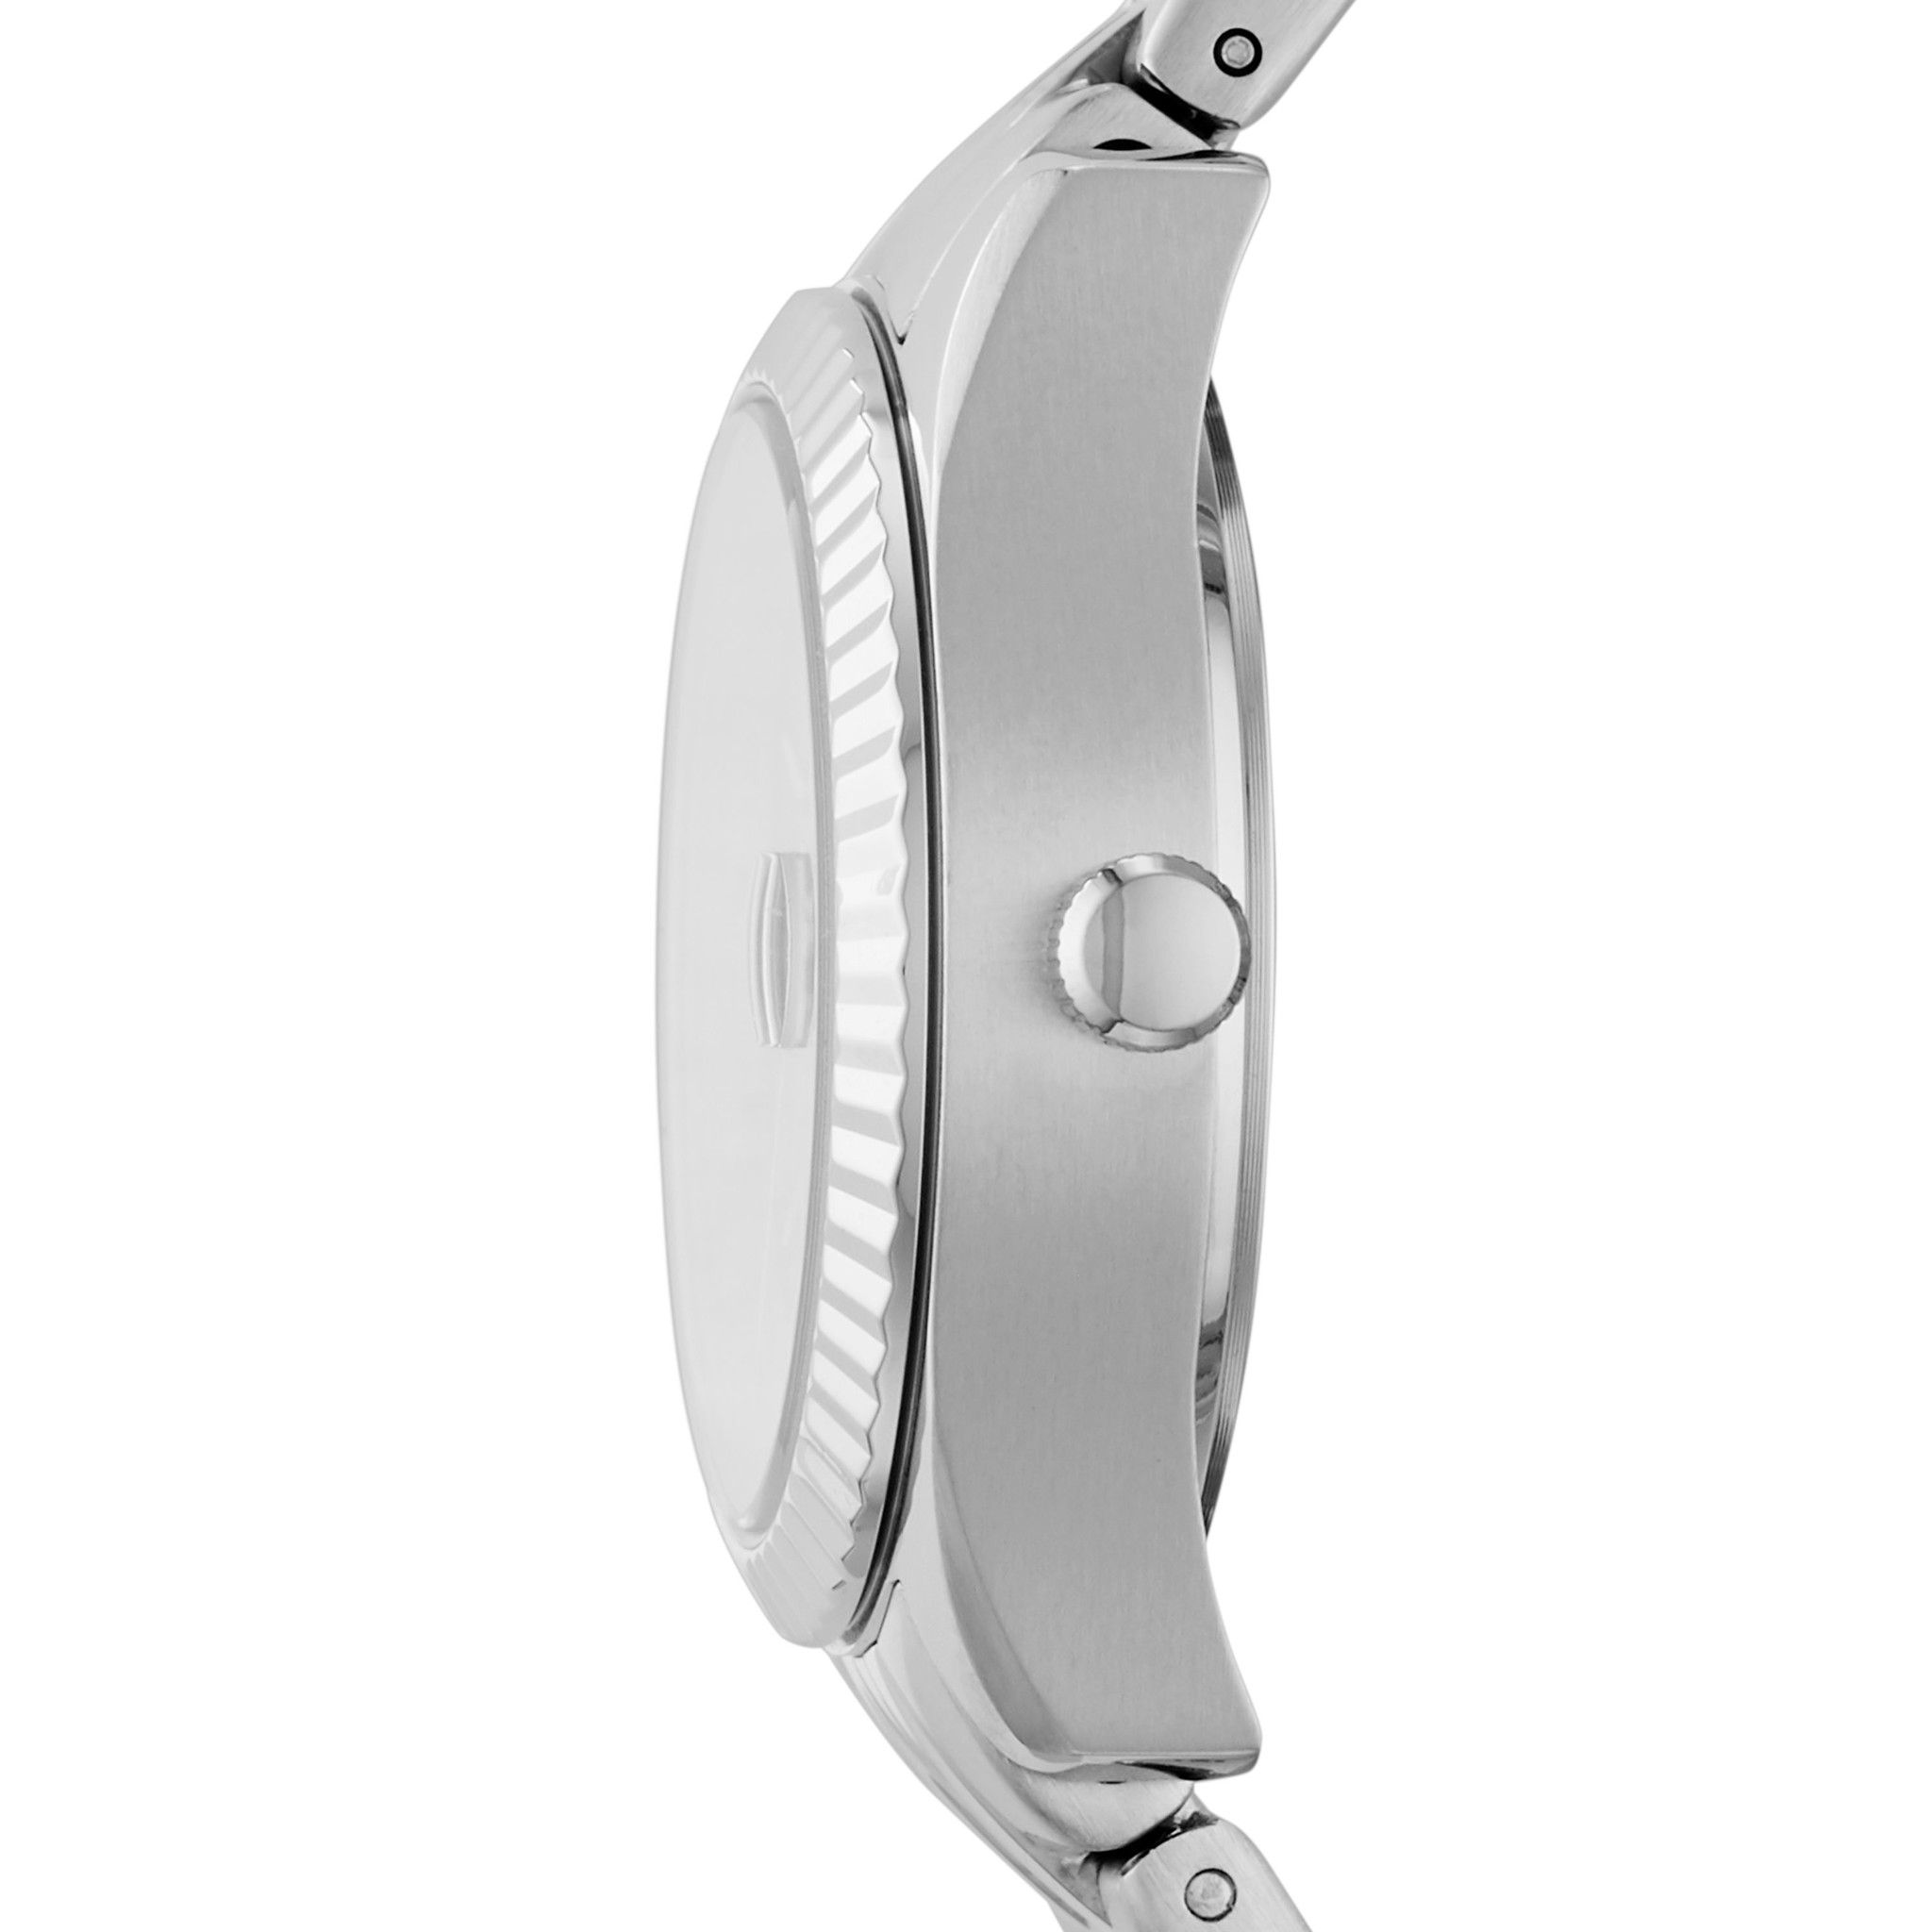  Đồng hồ nữ Fossil Scarlette Mini Three-Hand Date dây kim loại ES5061 - màu bạc 